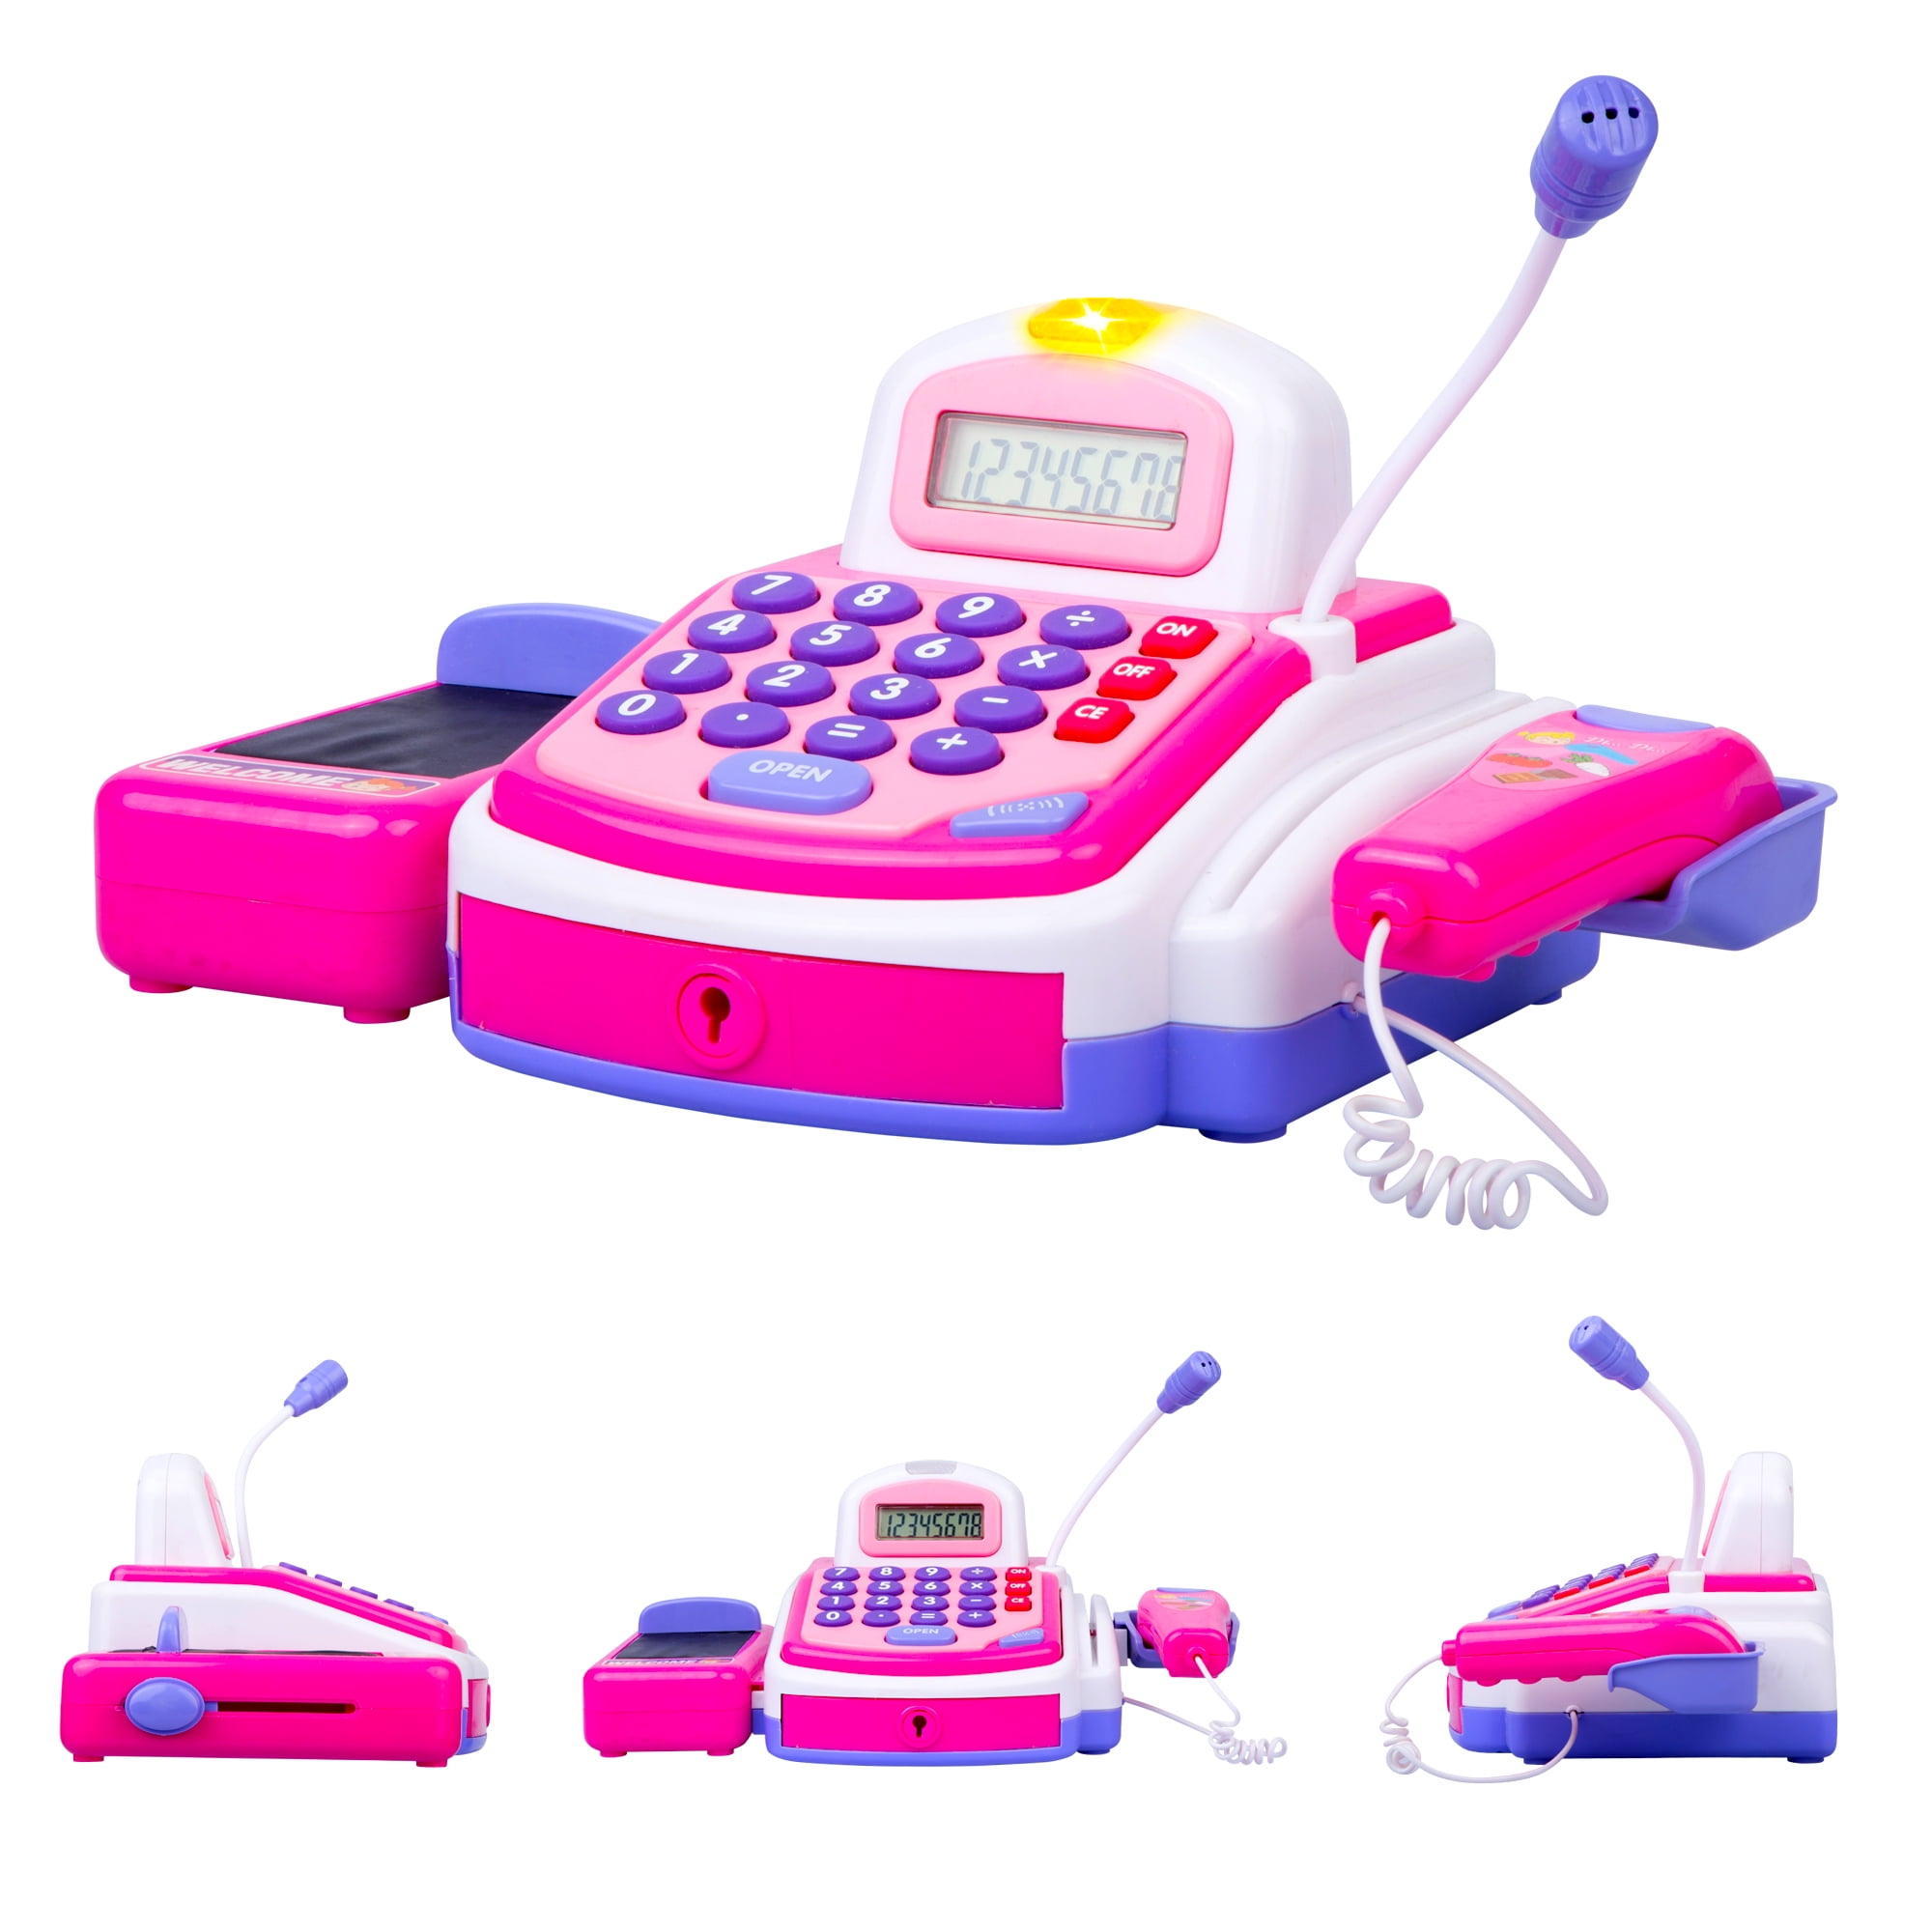 Pretend Play Toys Kid Cash Register for Kids Children Junlucki Cash Register Toy Pink 